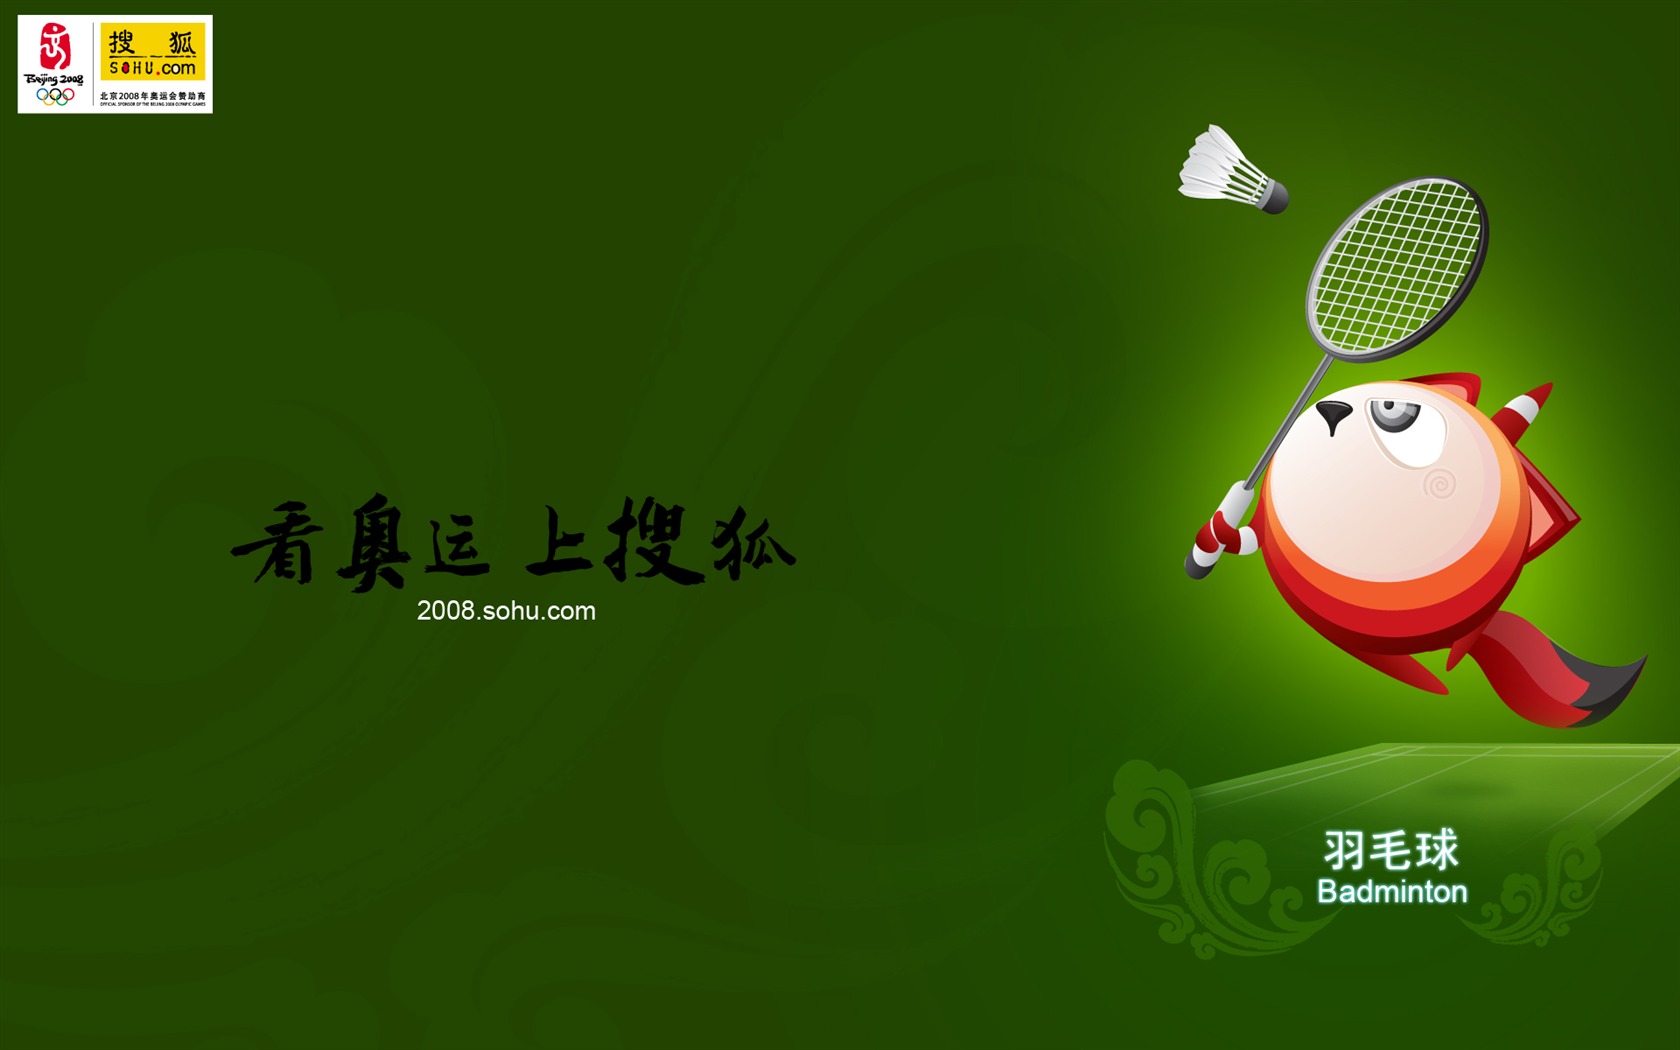 Sohu Olympic sports style wallpaper #21 - 1680x1050